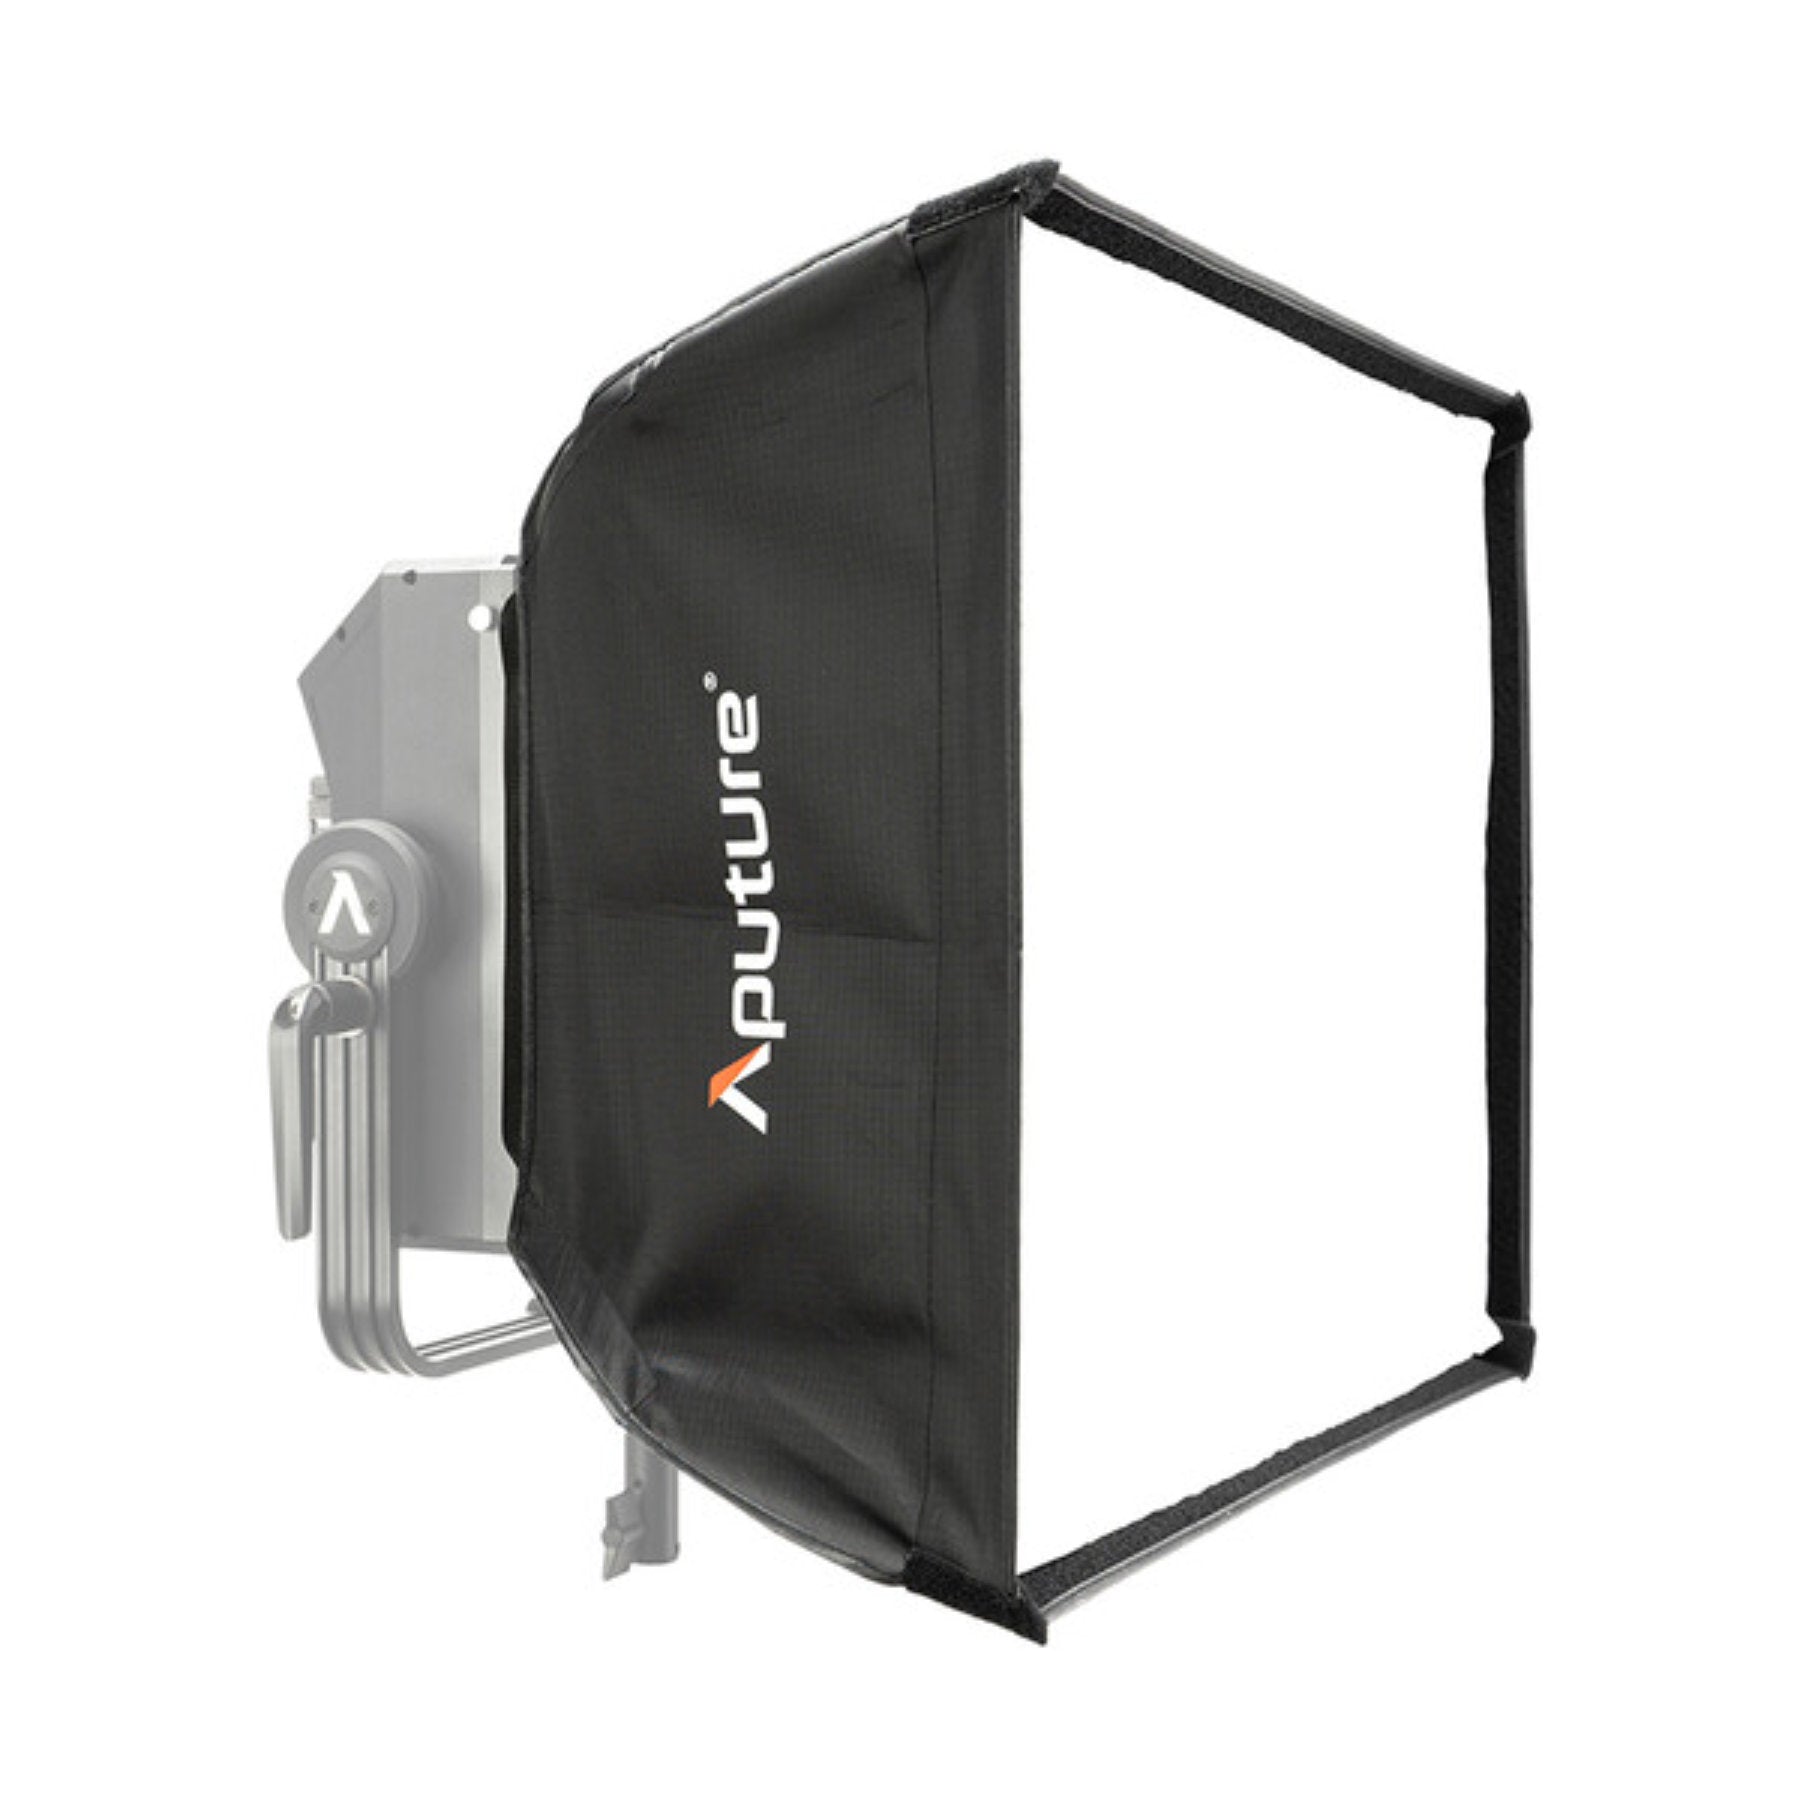 Buy Aputure Nova Softbox for P300c LED Panel at Topic Store